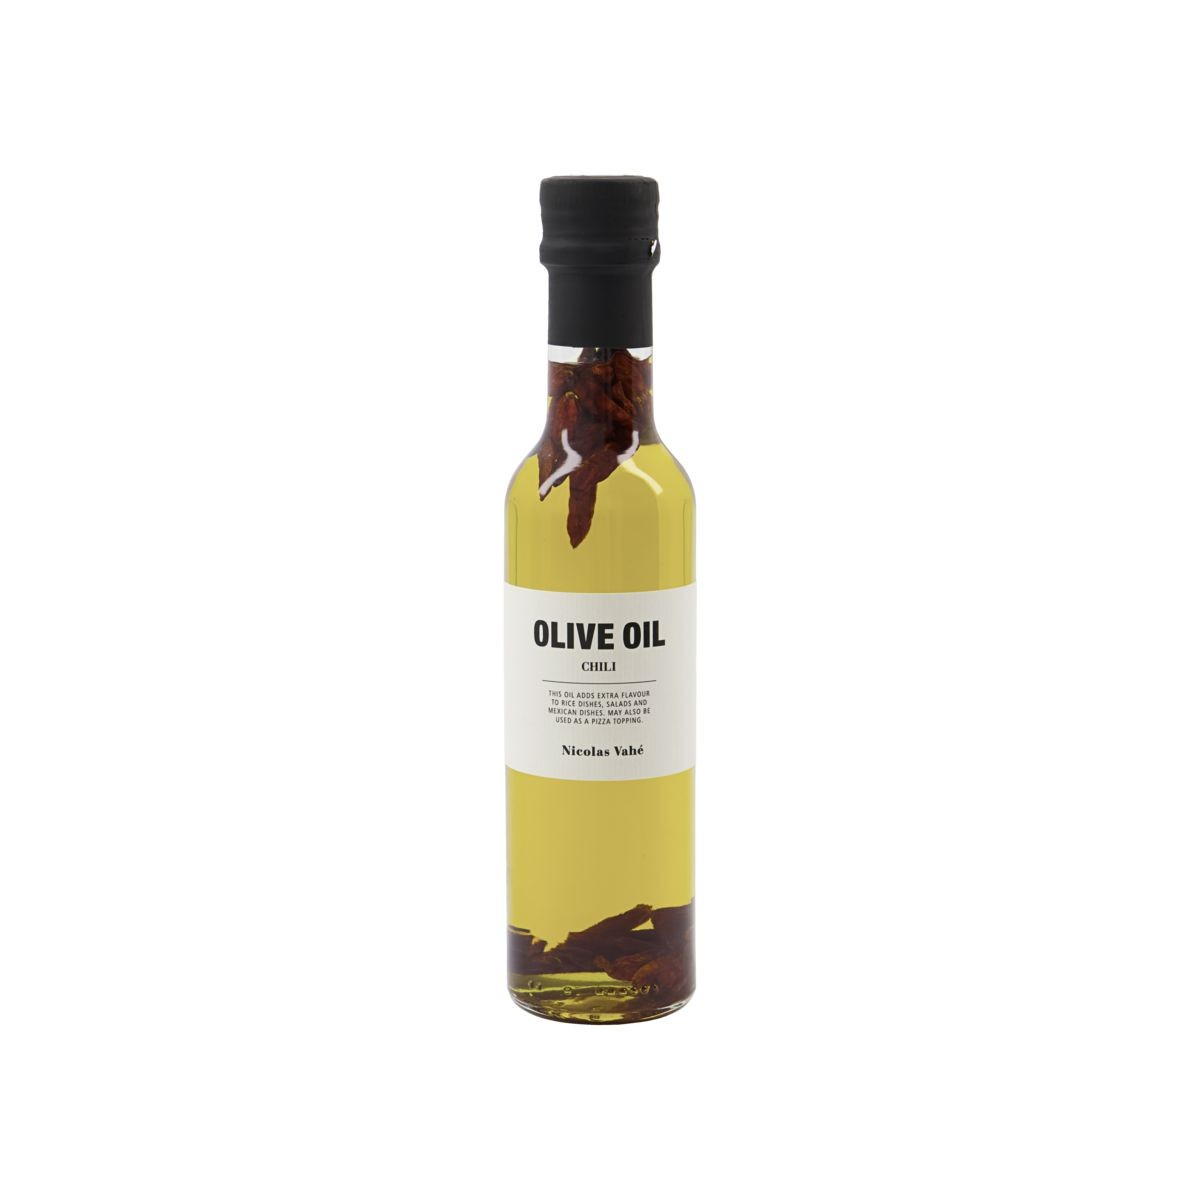 Olivový olej chilli 250 ml OLIVE OIL CHILLI Nicolas Vahé